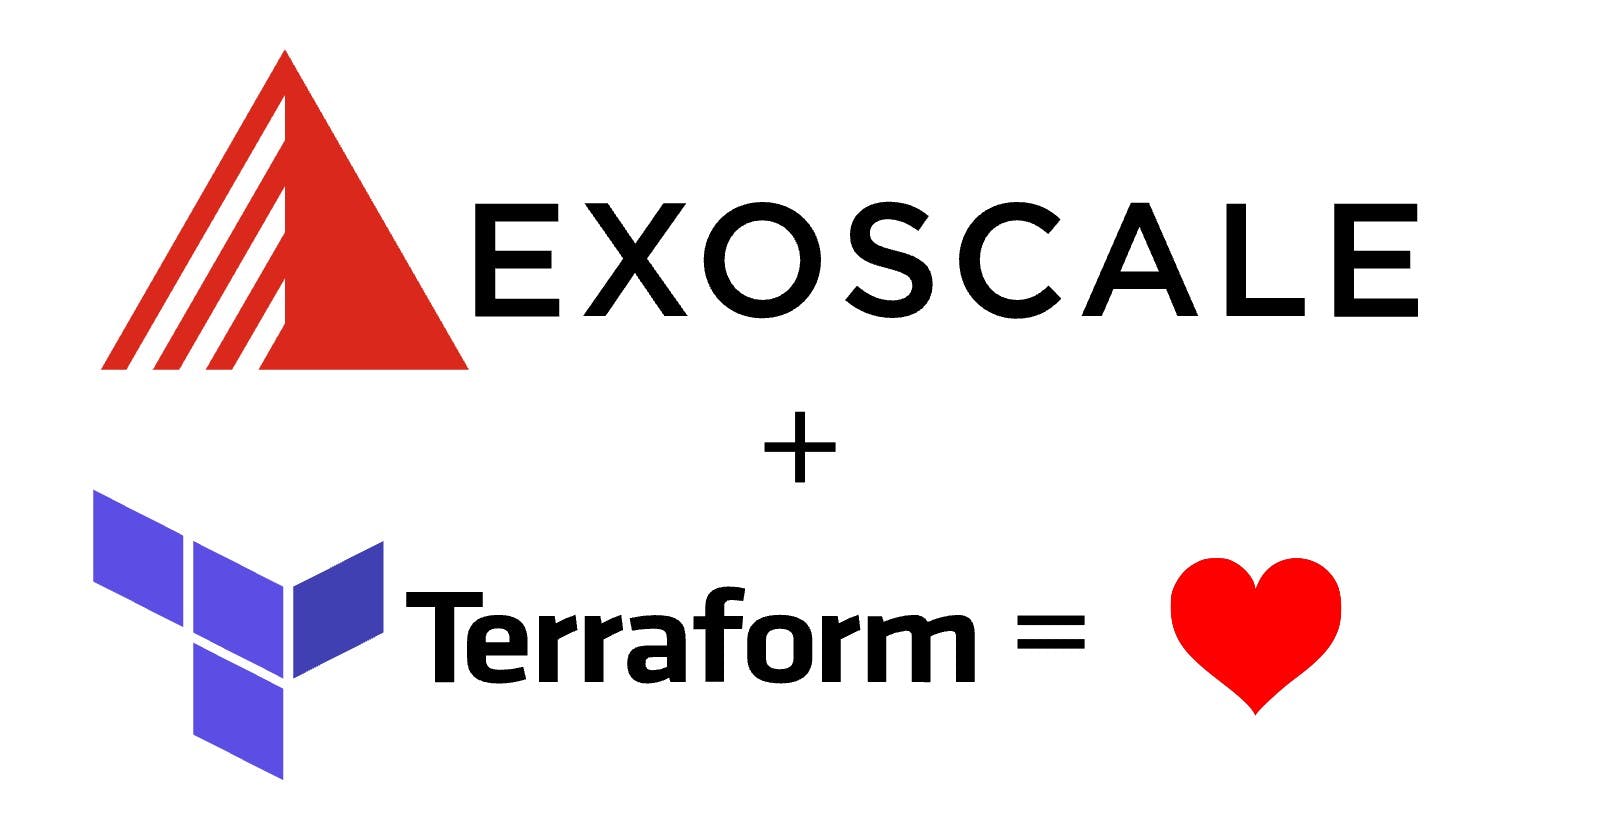 Terraform and Exoscale